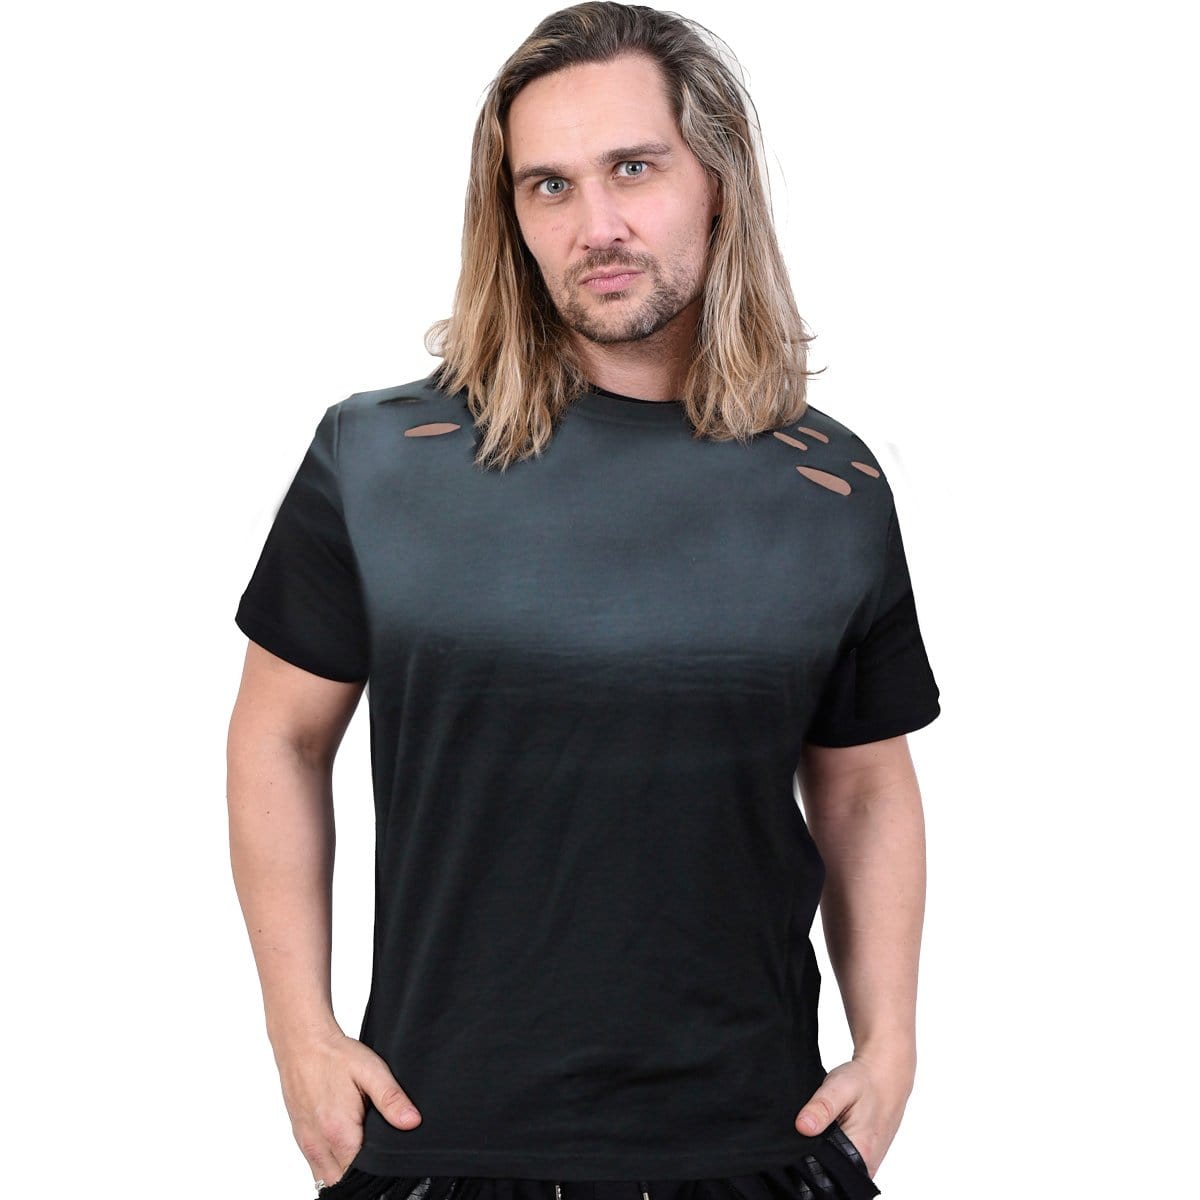 URBAN FASHION - Distressed Spray On T-Shirt - Spiral USA